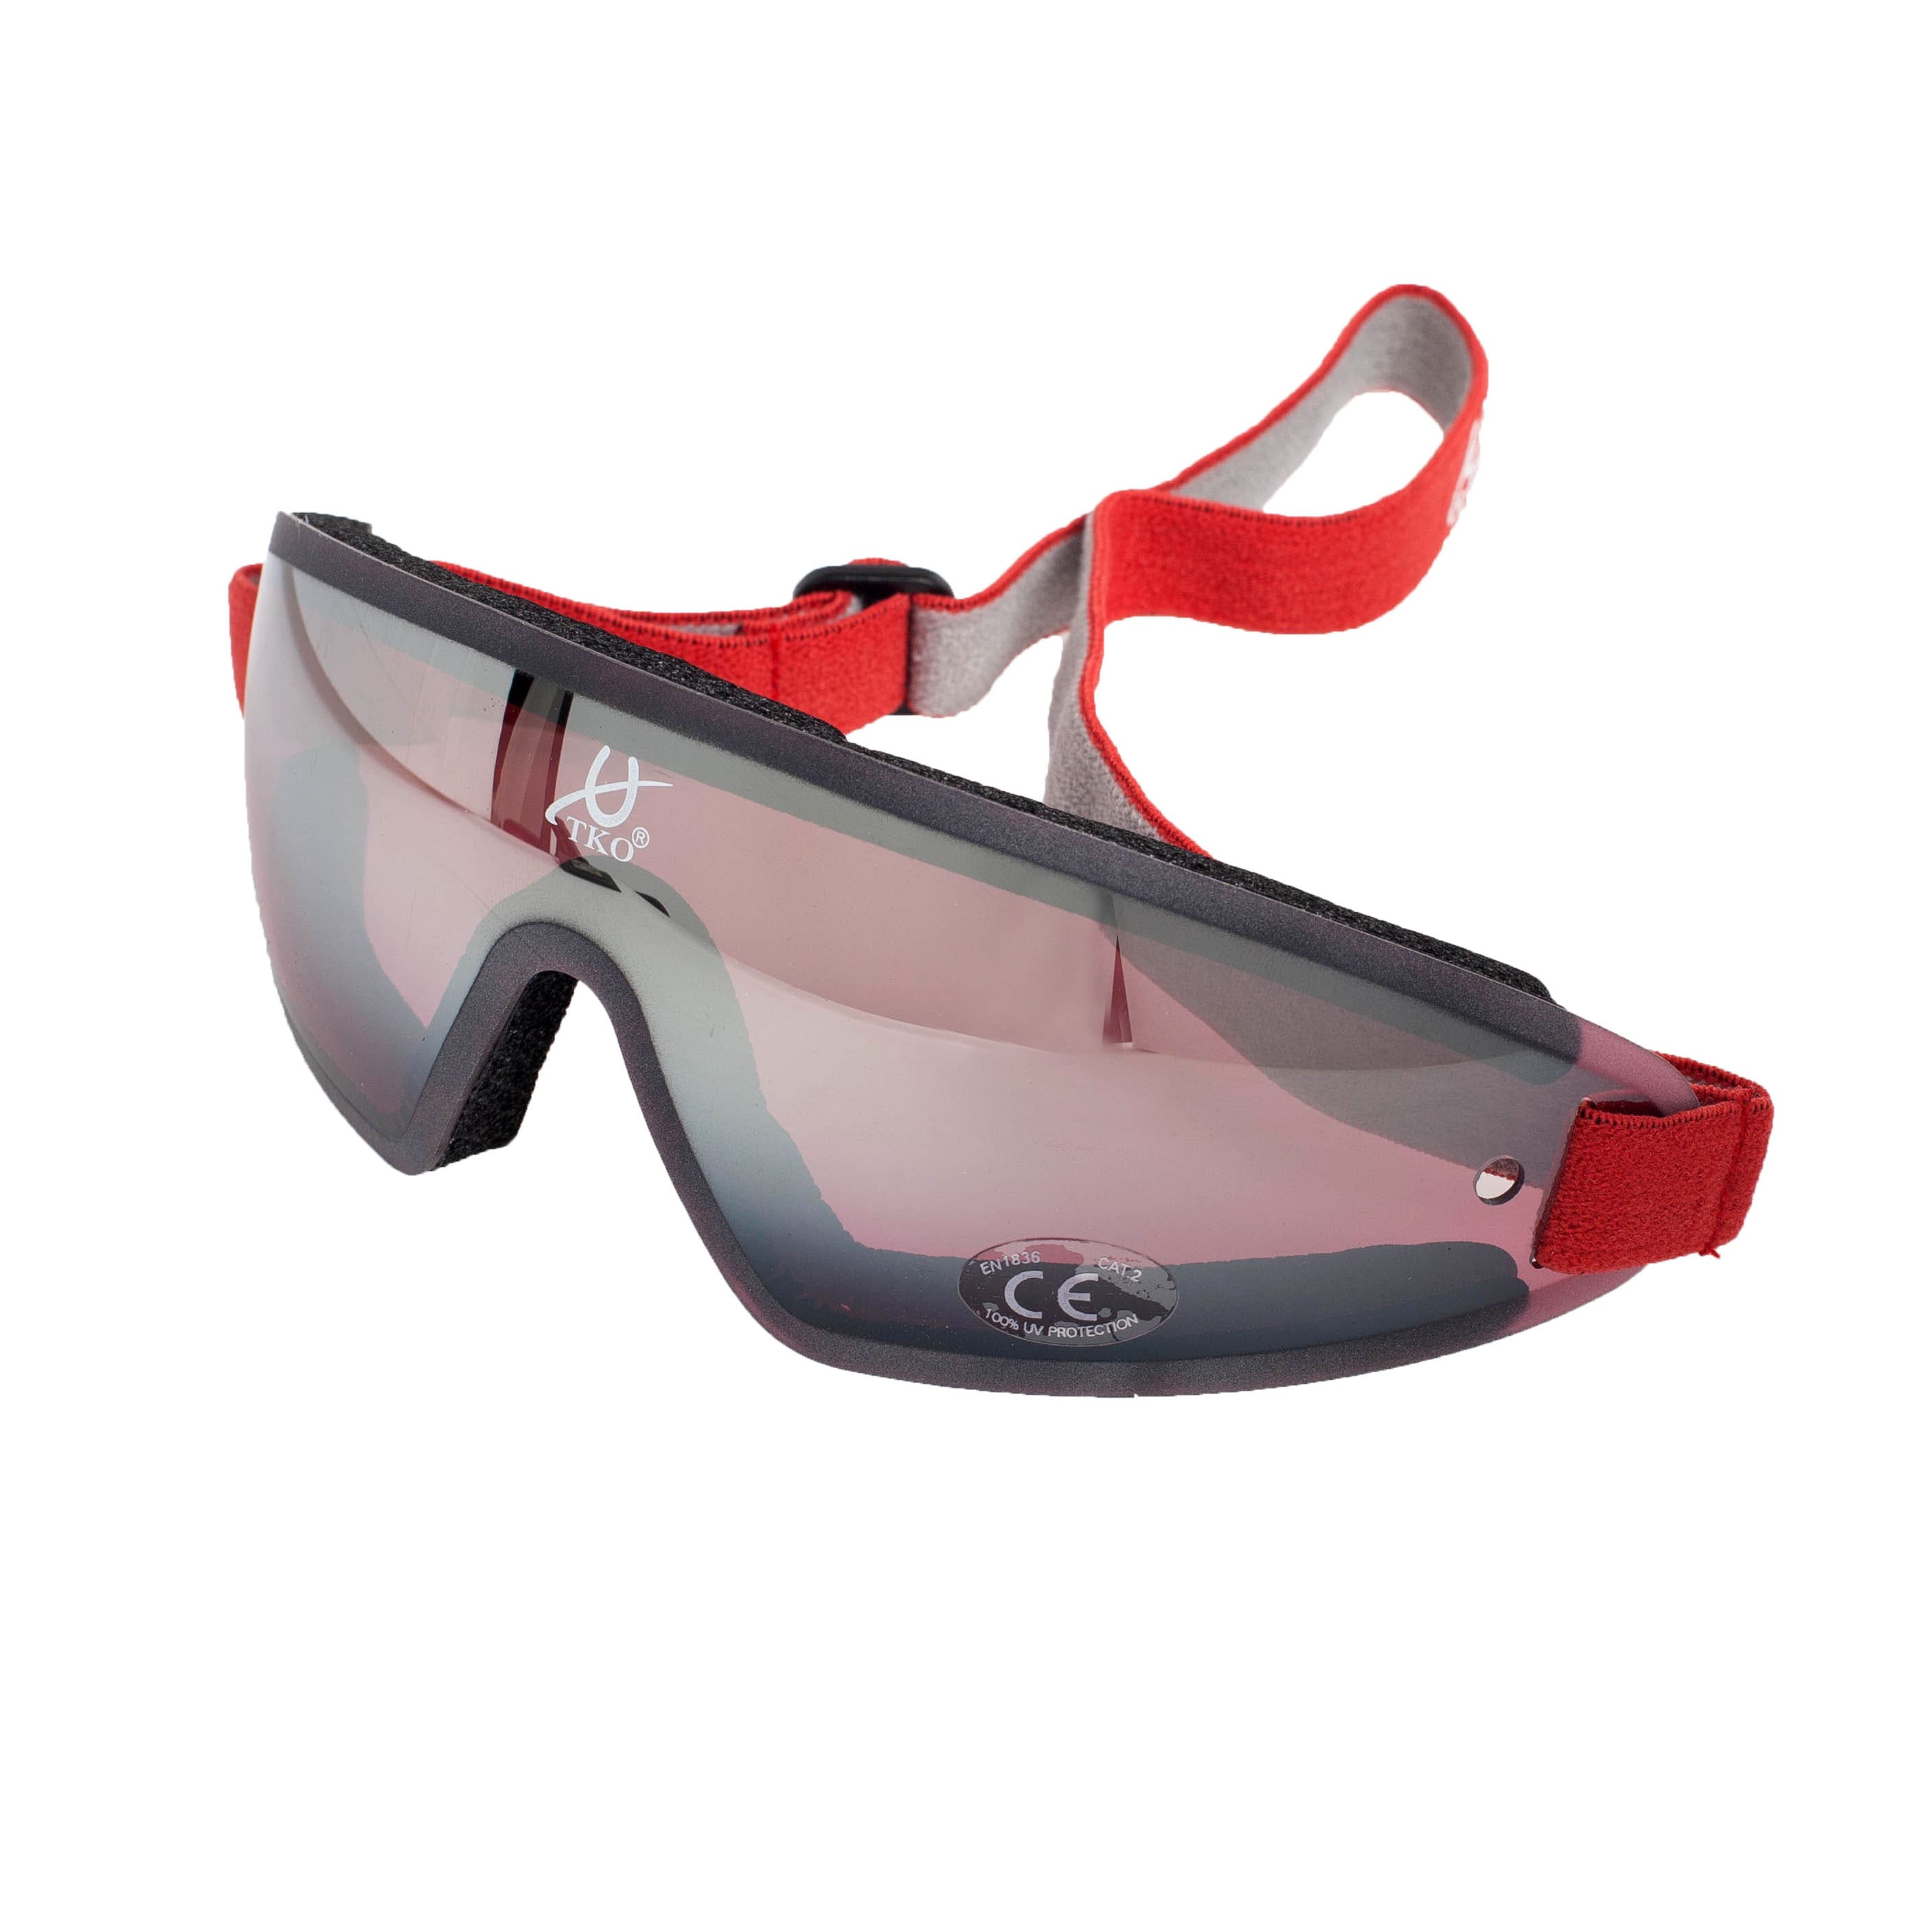 TKO - Aerodynamisk polycarbonat løbsbrille